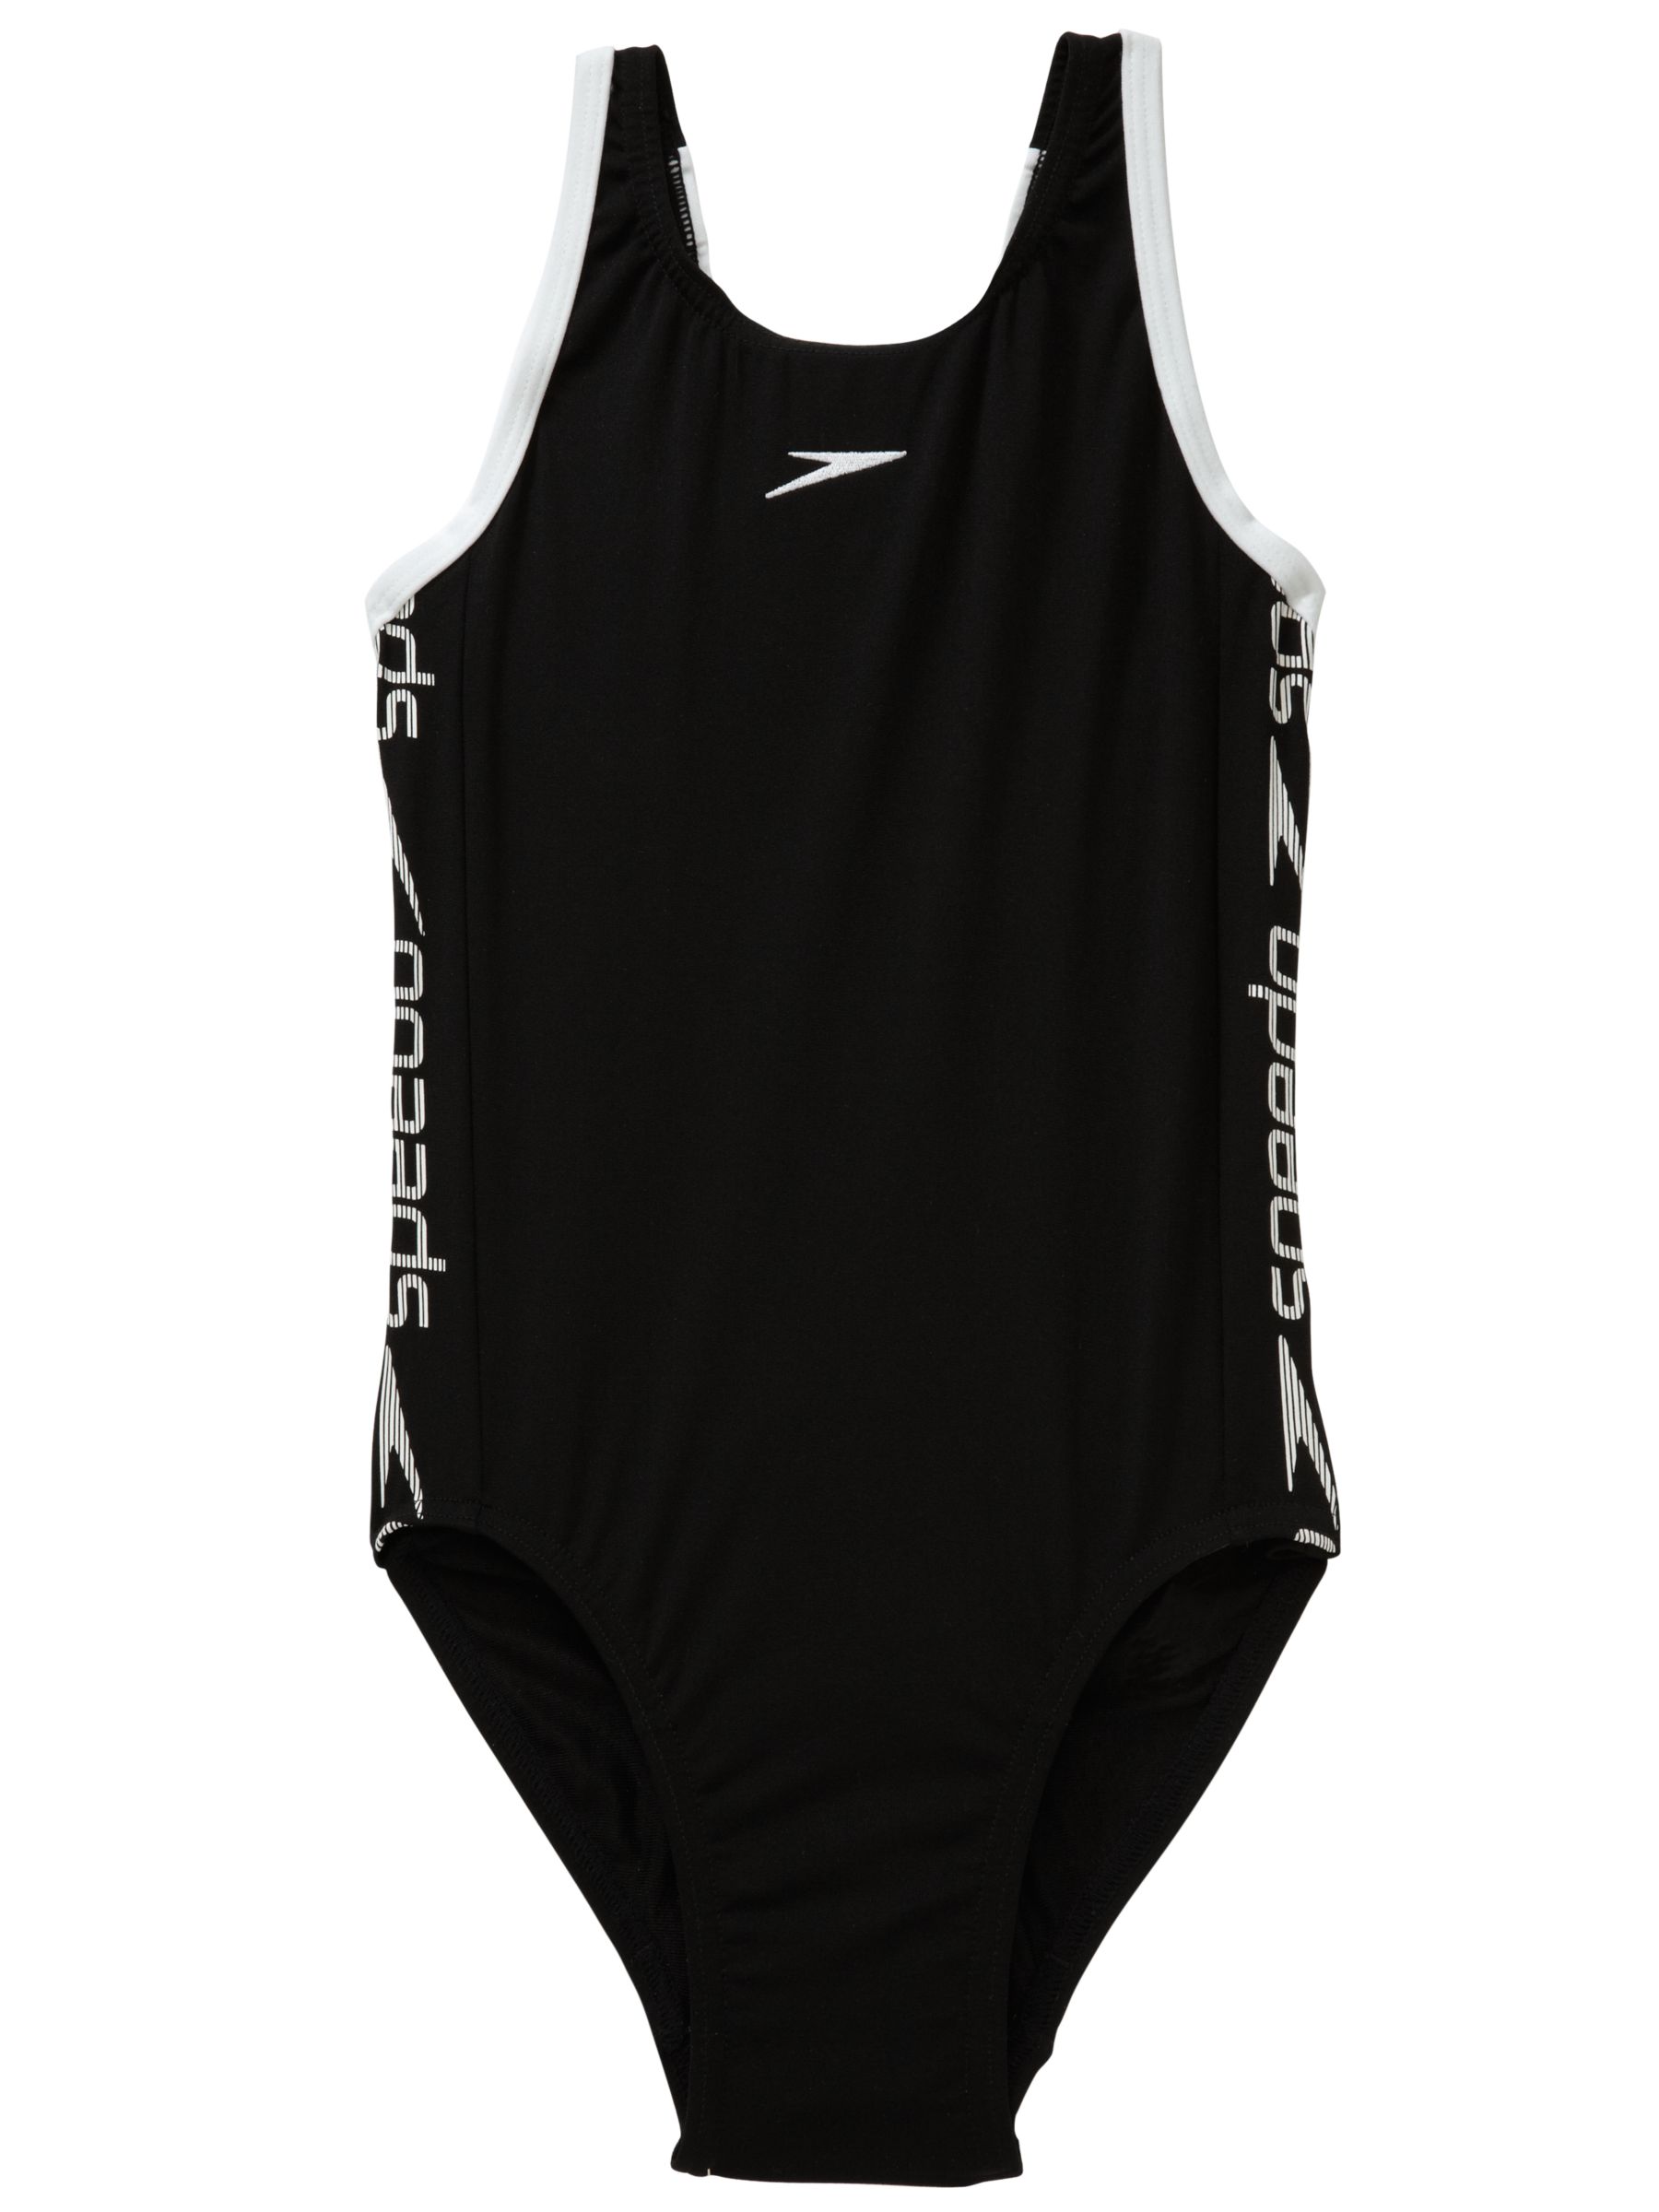 Speedo Superiority Swimsuit, Black/white